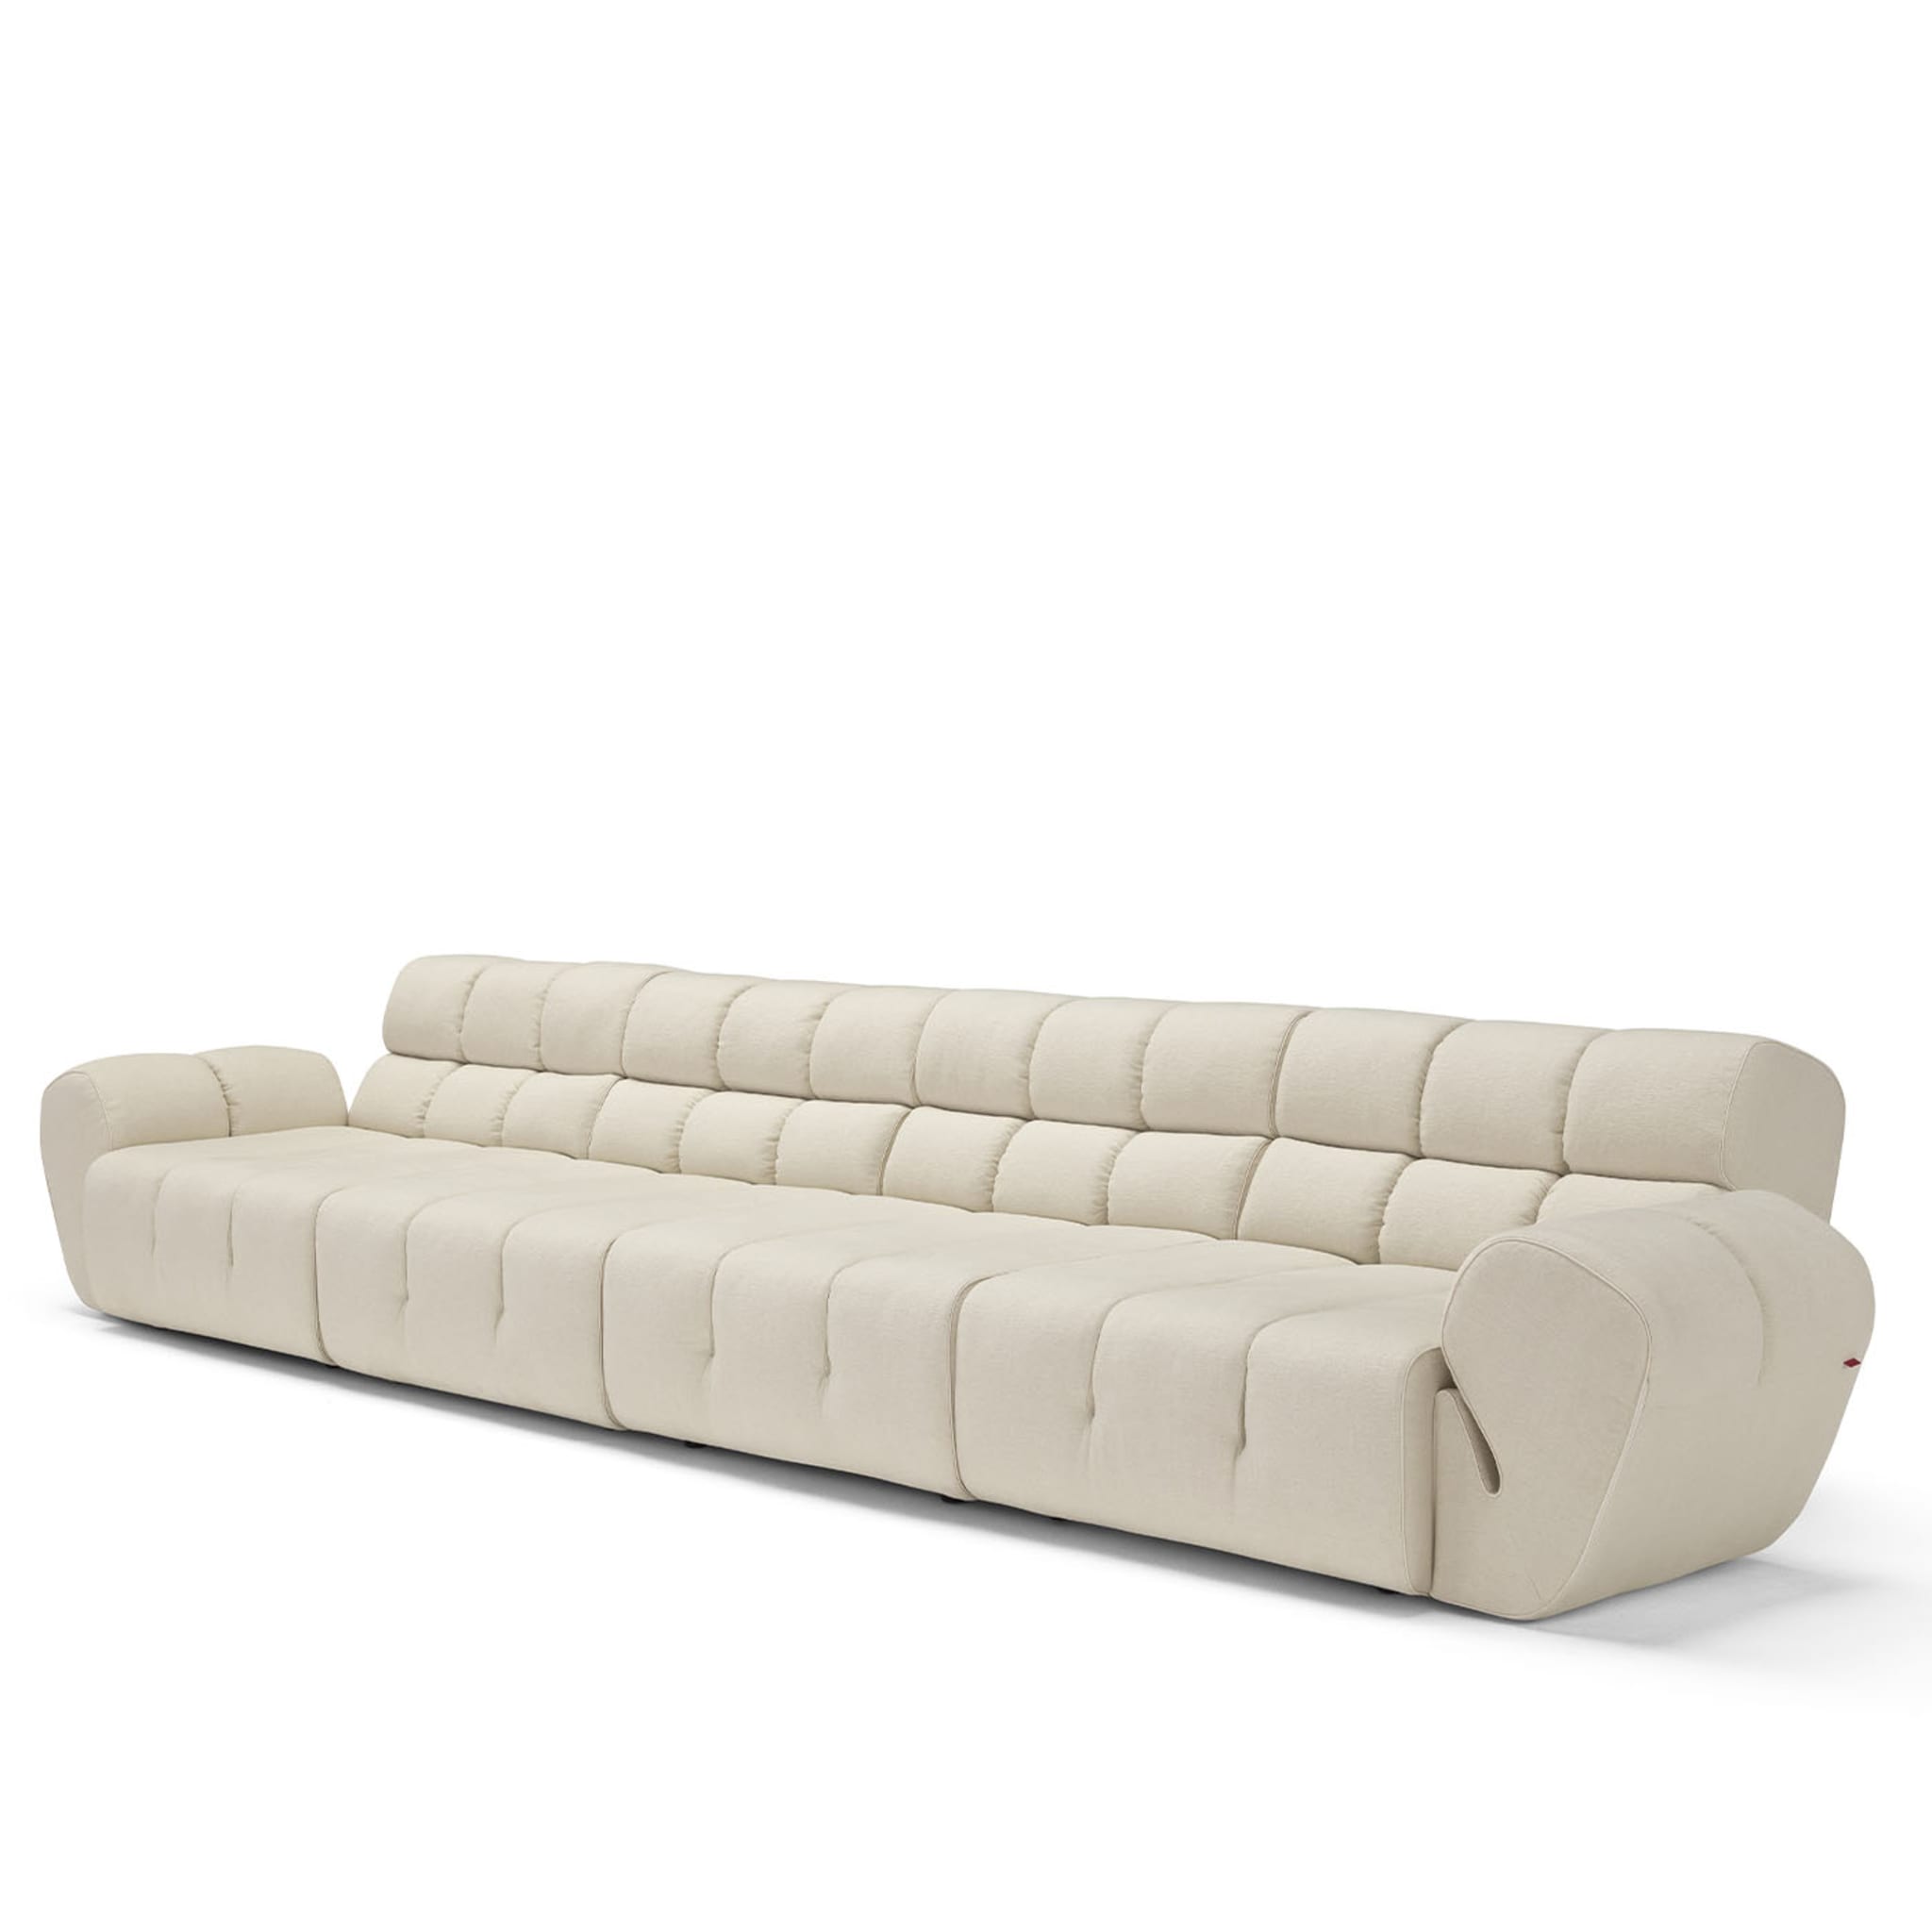 Palmo Modular White Sofa by Emanuel Gargano - Alternative view 1